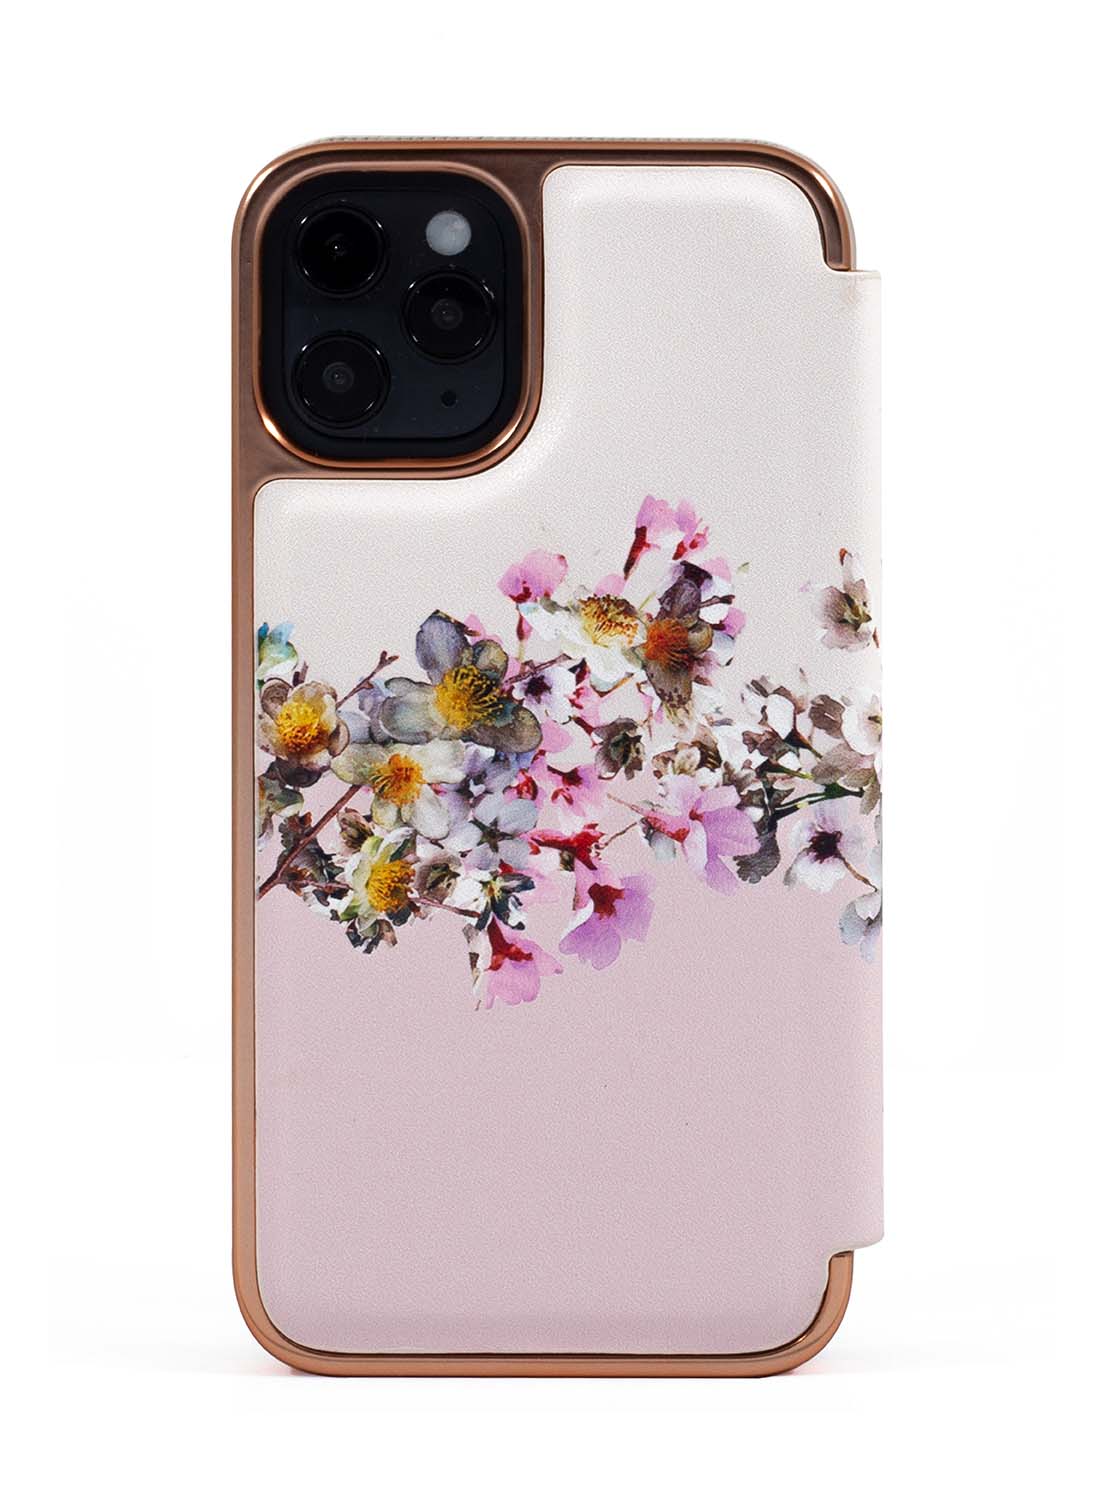 Ted Baker iPhone 12 Mini Mirror Folio Case - Elegant Book Case w/ Built-in Mirror, Wireless Charging Compatible, Women/Girls Phone Case - Jasmine Pink Rose Gold